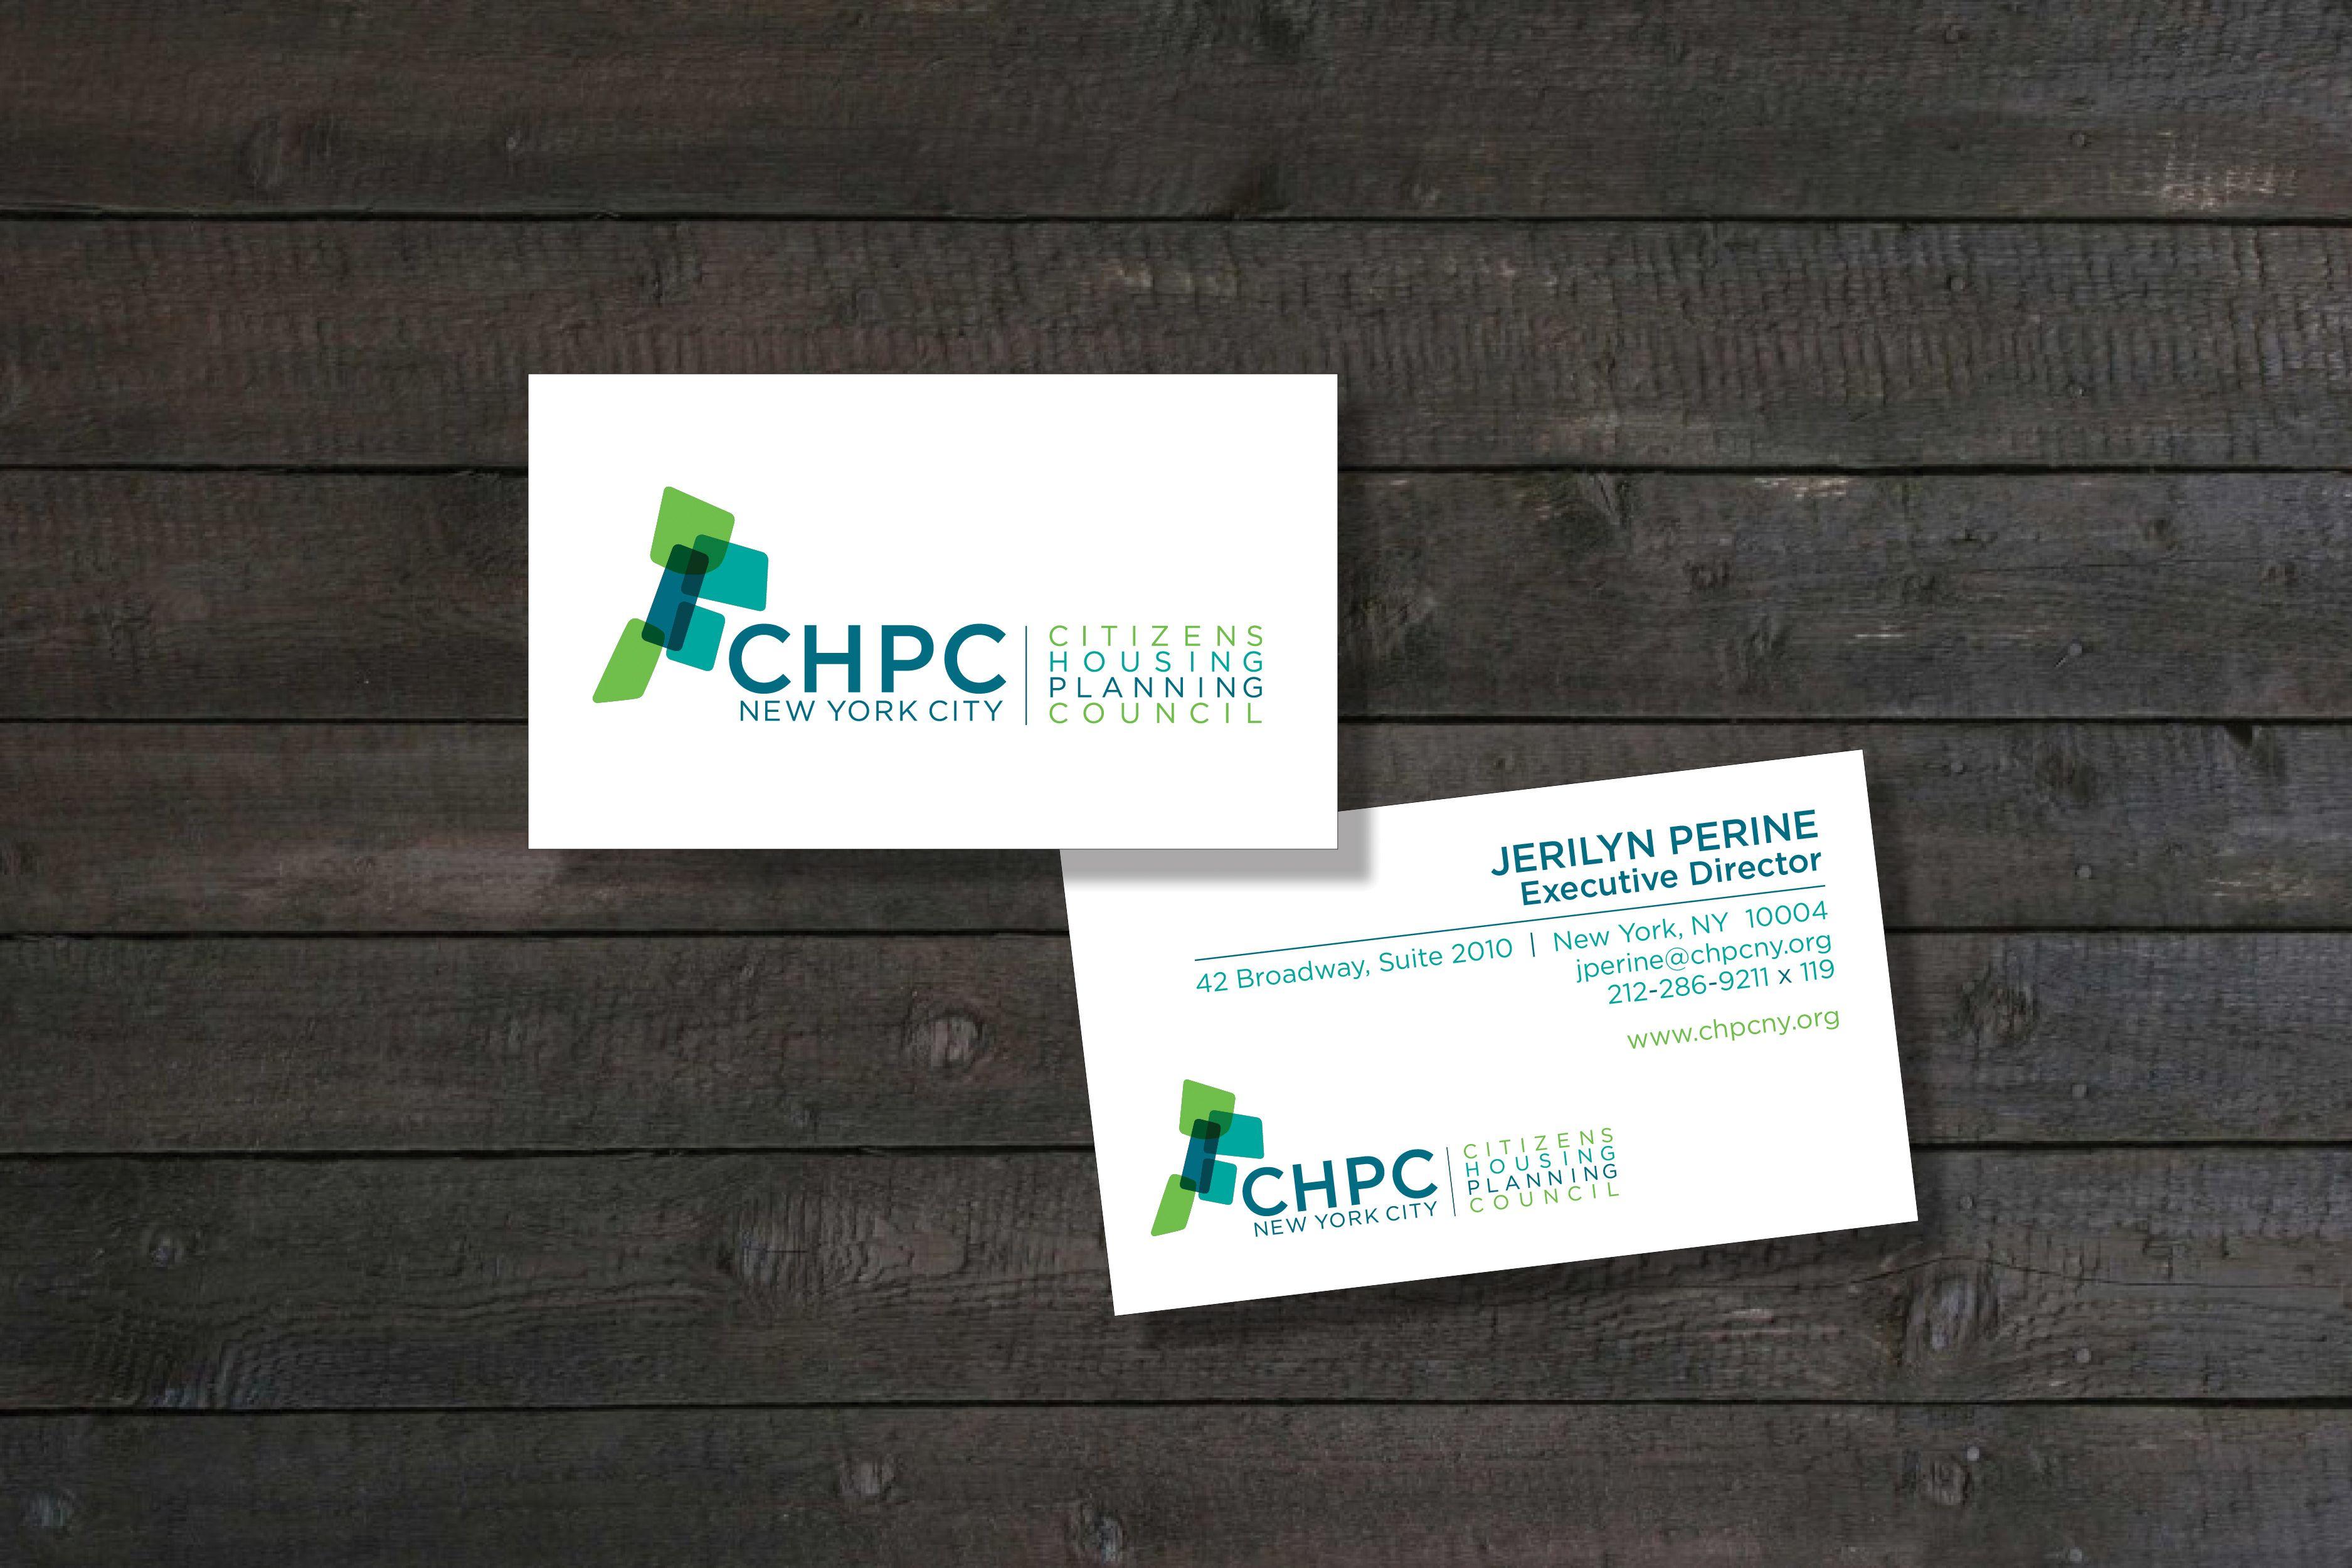 Chpc Logo - CHPC NYC – Aram DesignsAram Designs